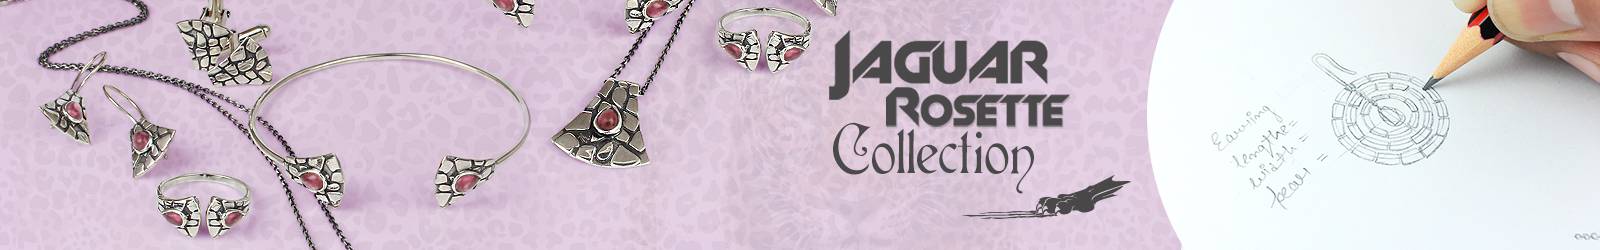 Handmade Textured Jaguar Rosette Collection Manufacturer in Jaipur